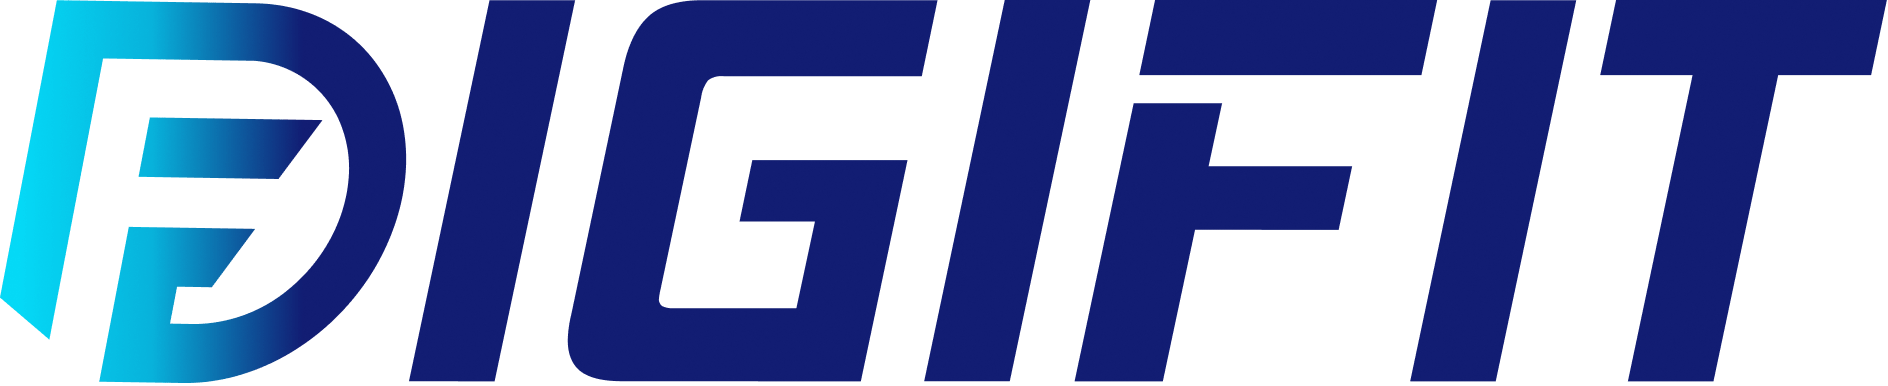 digifit logo 1